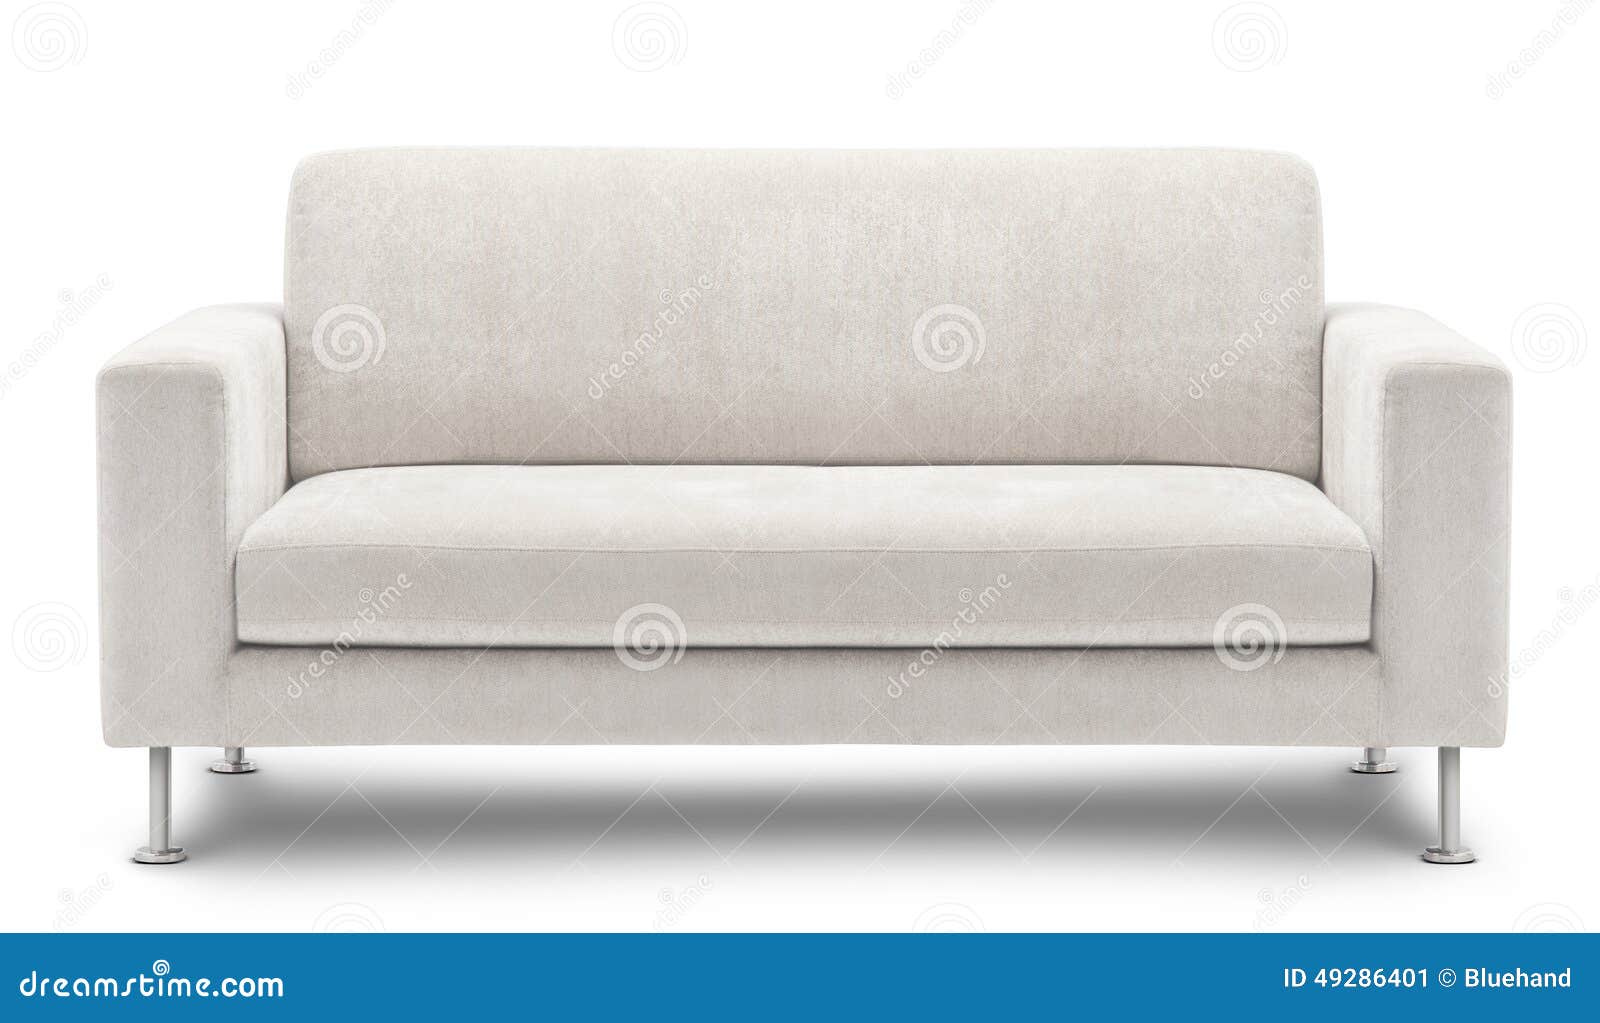 sofa furniture  on white background